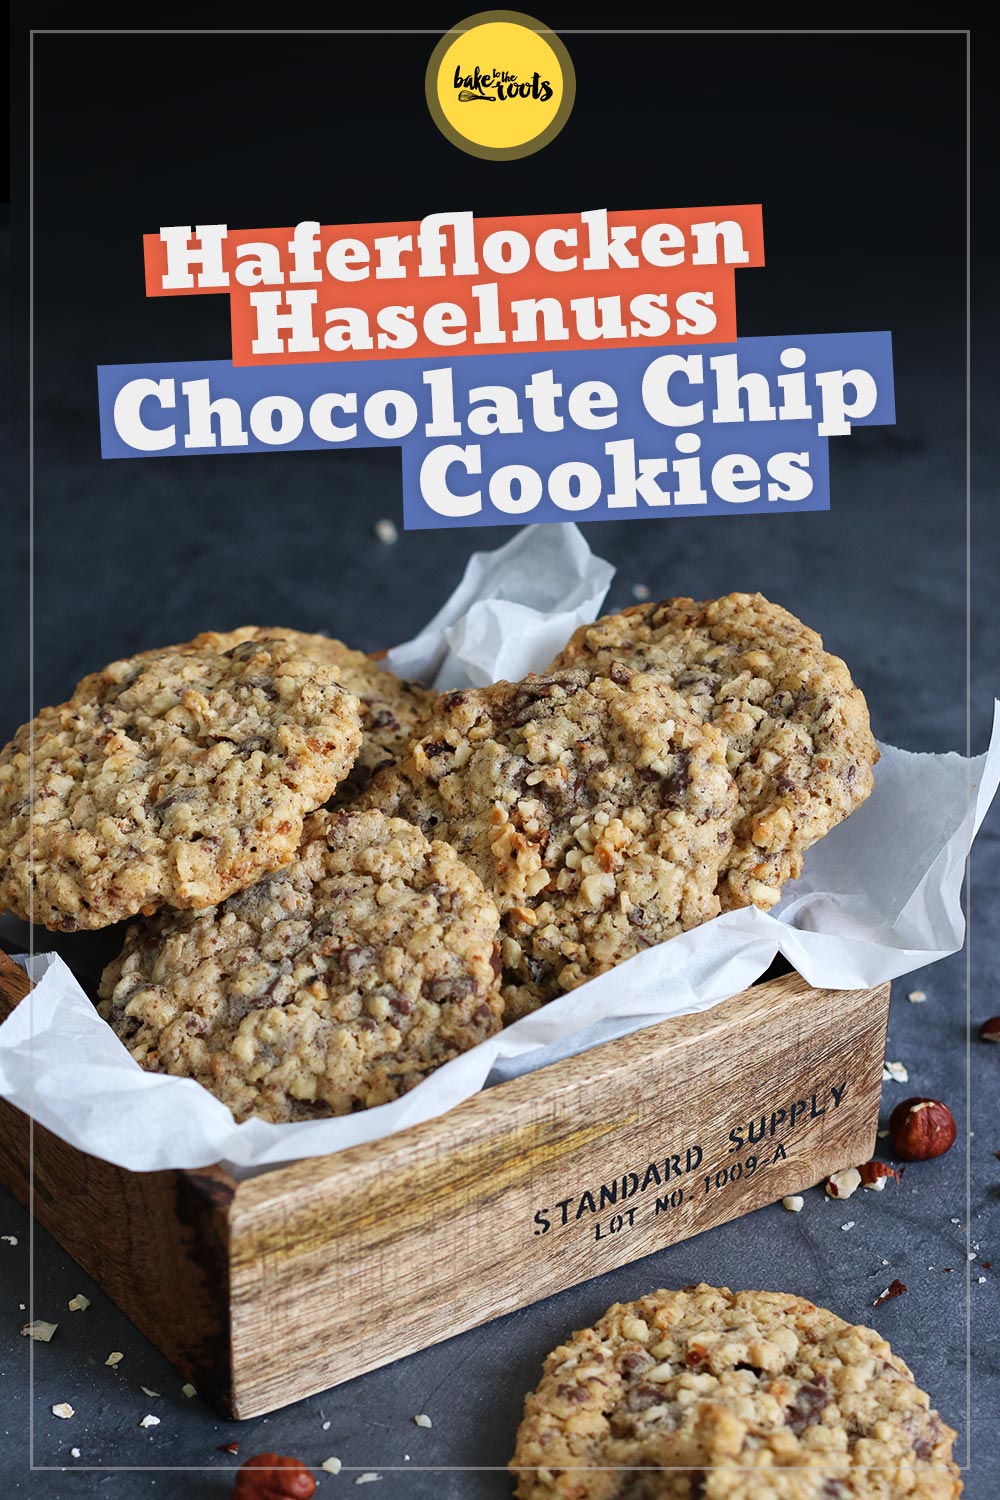 Haferflocken Haselnuss Chocolate Chip Cookies | Bake to the roots